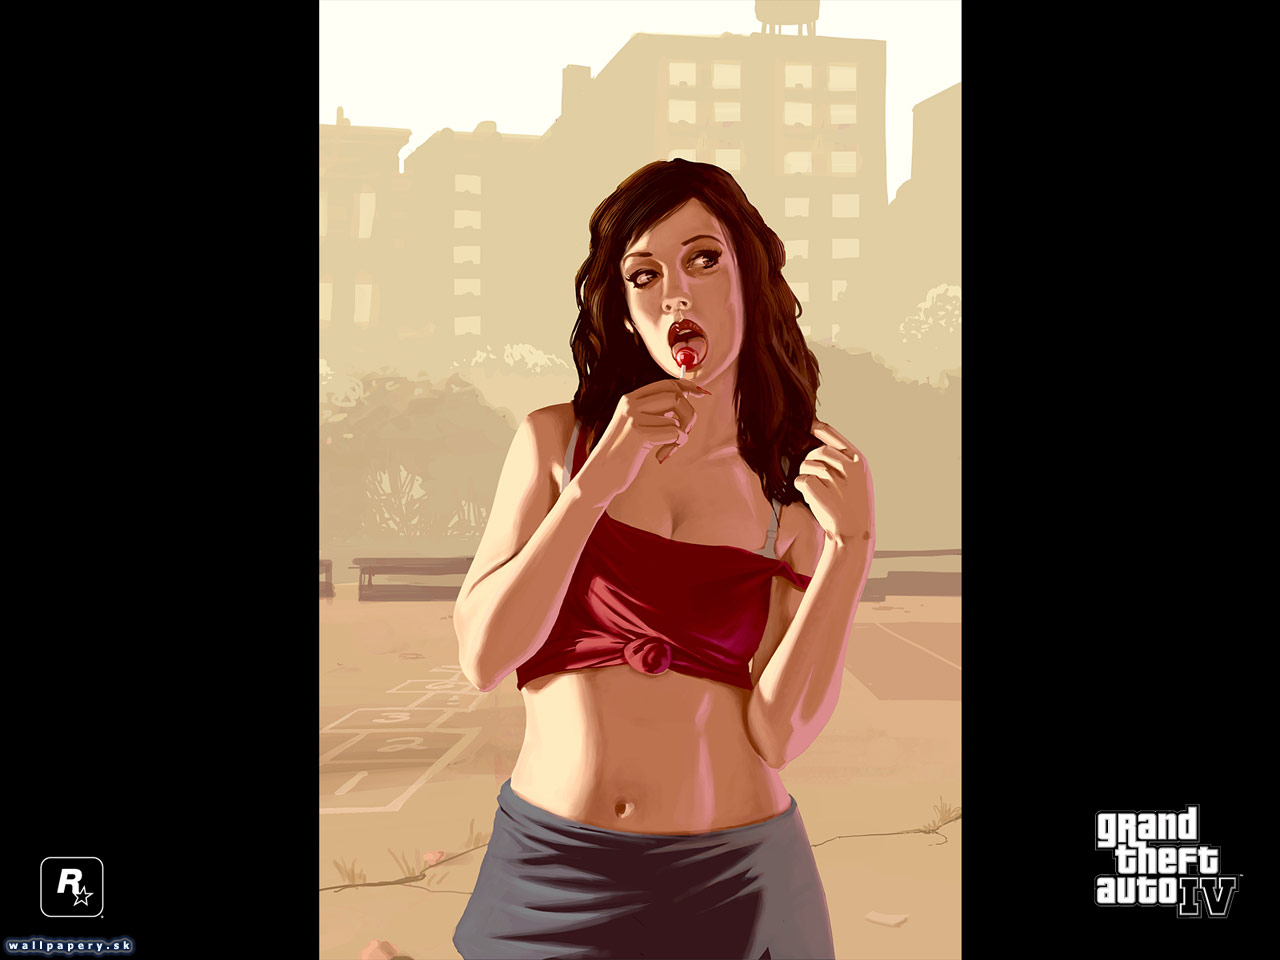 Grand Theft Auto IV - wallpaper 4